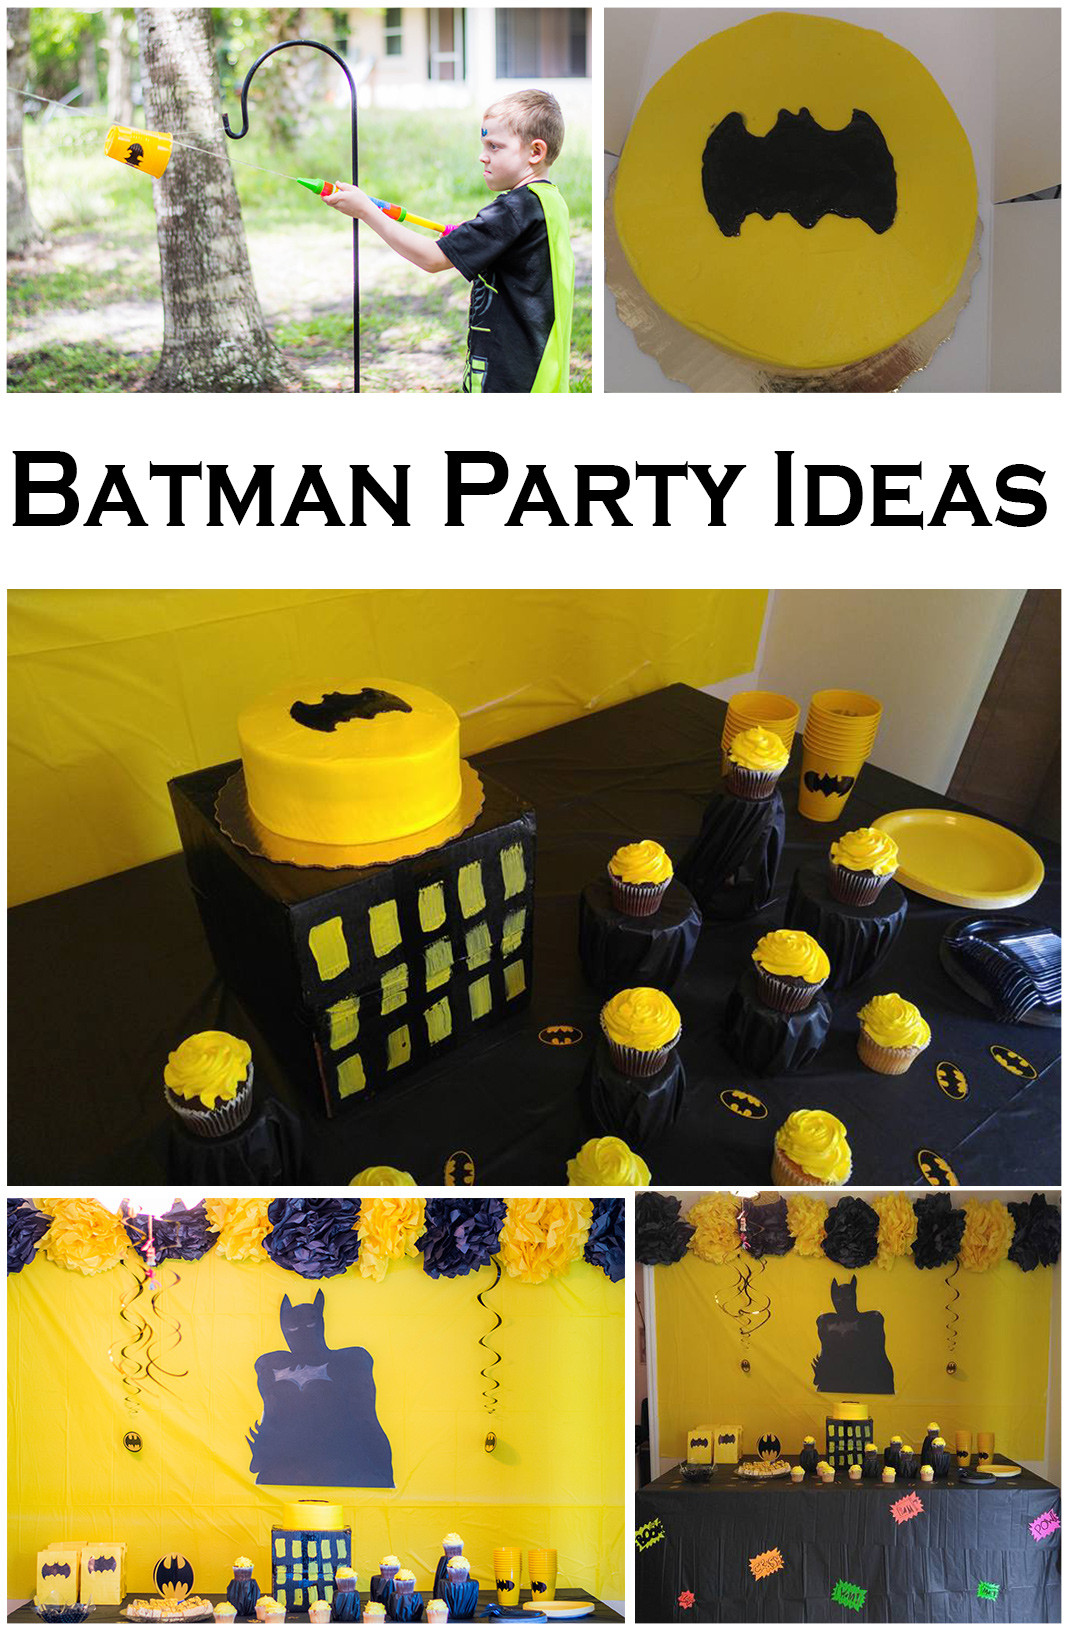 Batman Birthday Party Decorations
 Black and Yellow Batman Party Ideas